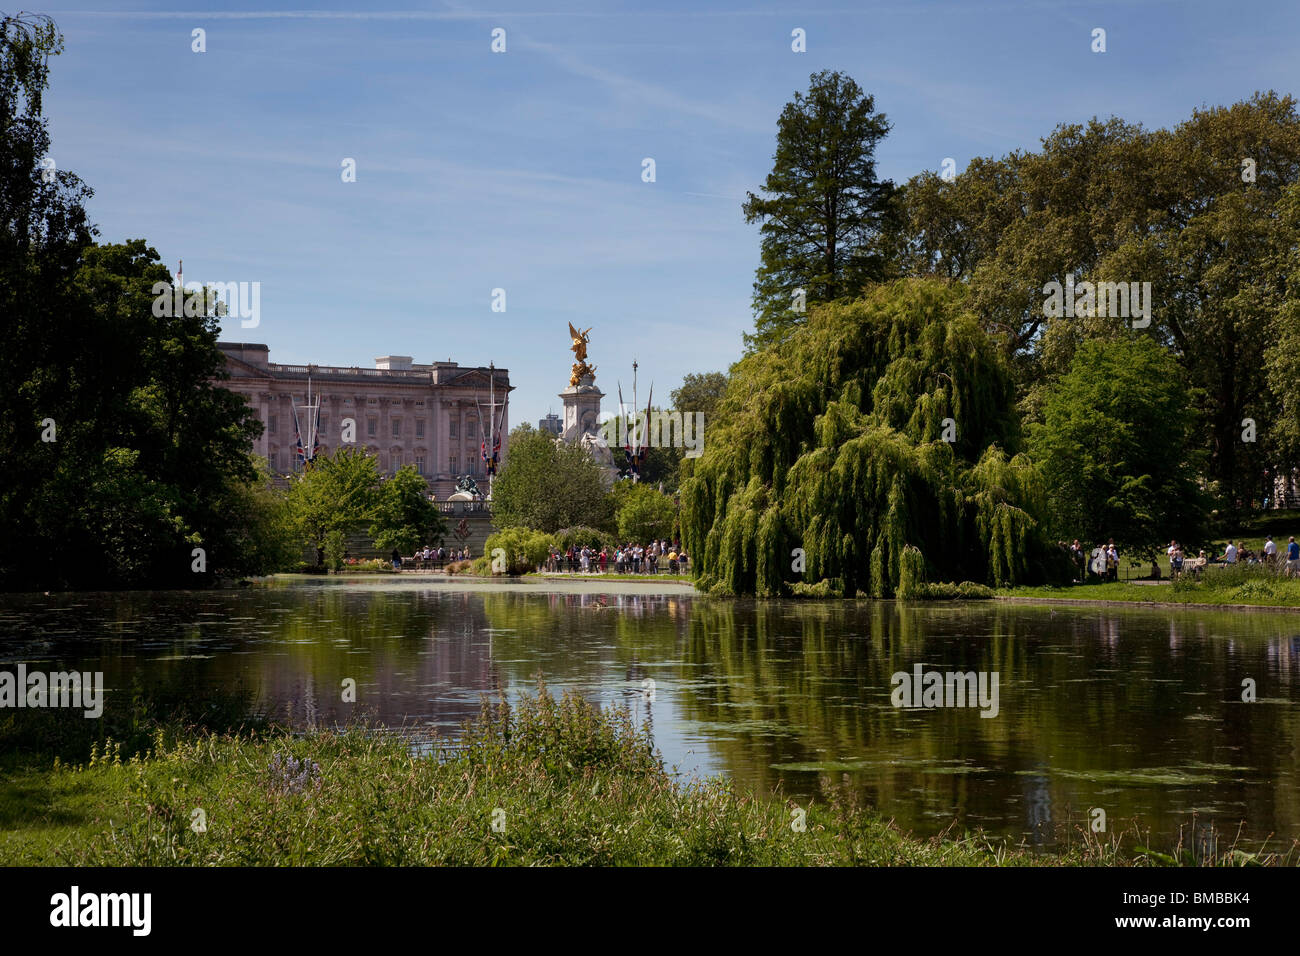 Looking across St James's Park Lake towards Buckingham Palace, London Stock Photo